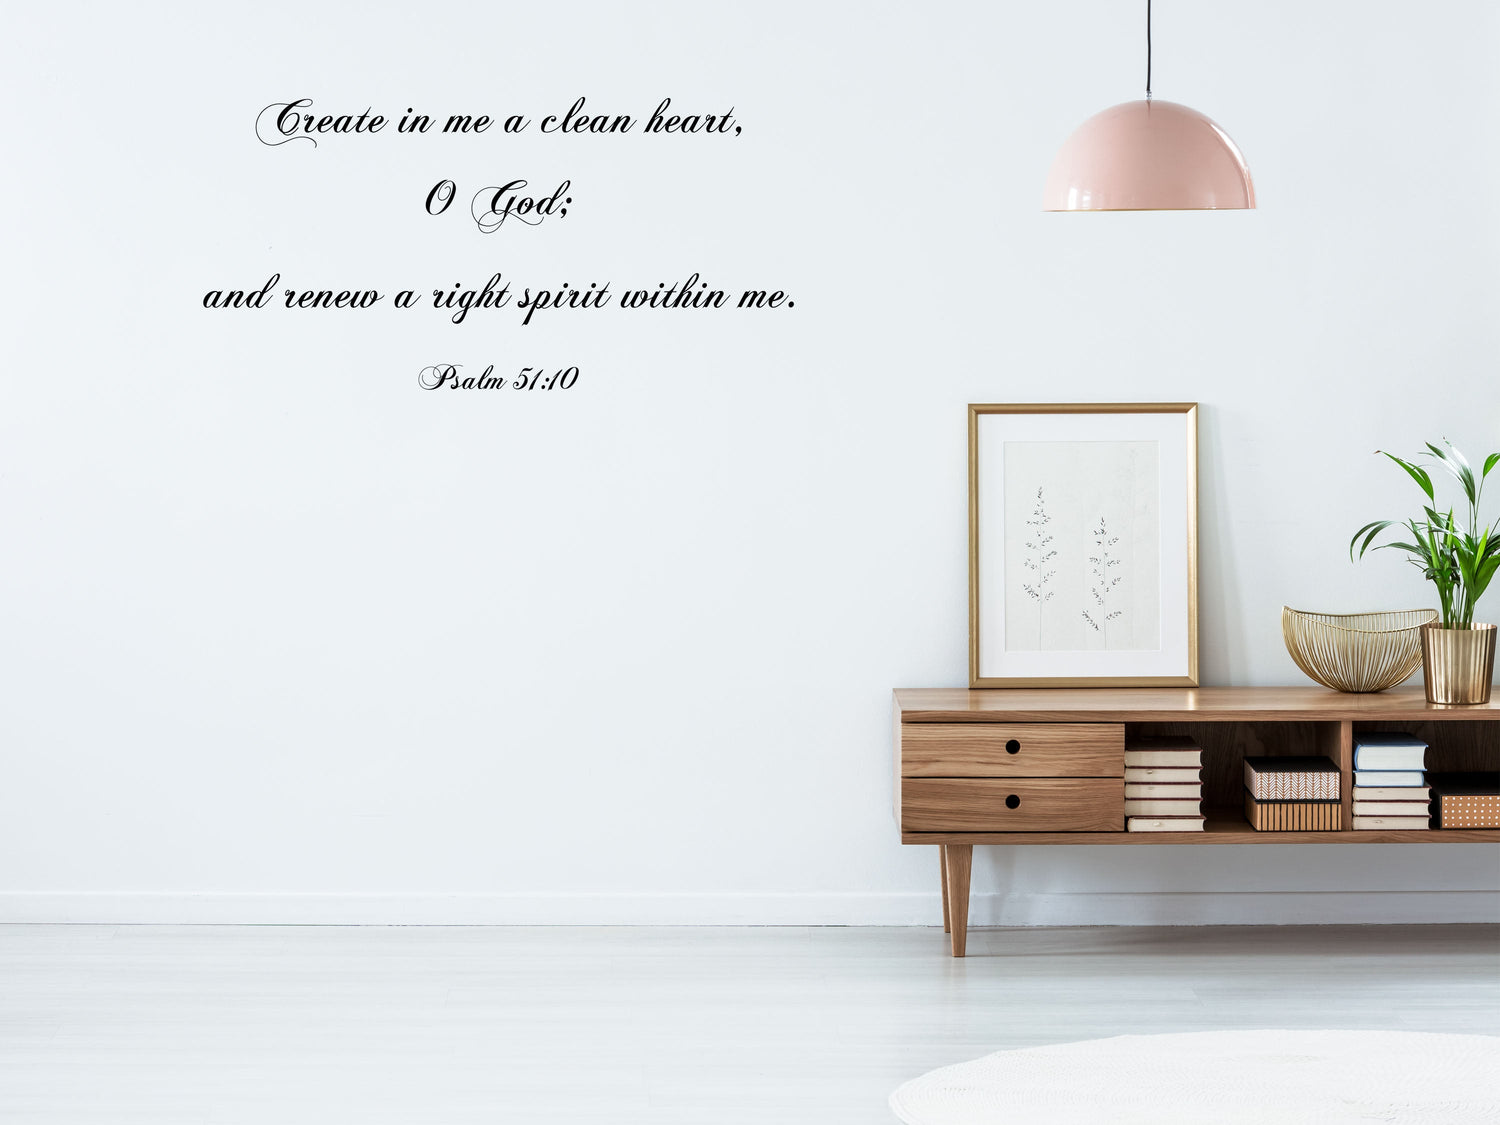 Psalm 51:10 - Scripture Wall Decals - Christian Bible Verse Decals Vinyl Wall Decal Inspirational Wall Signs 